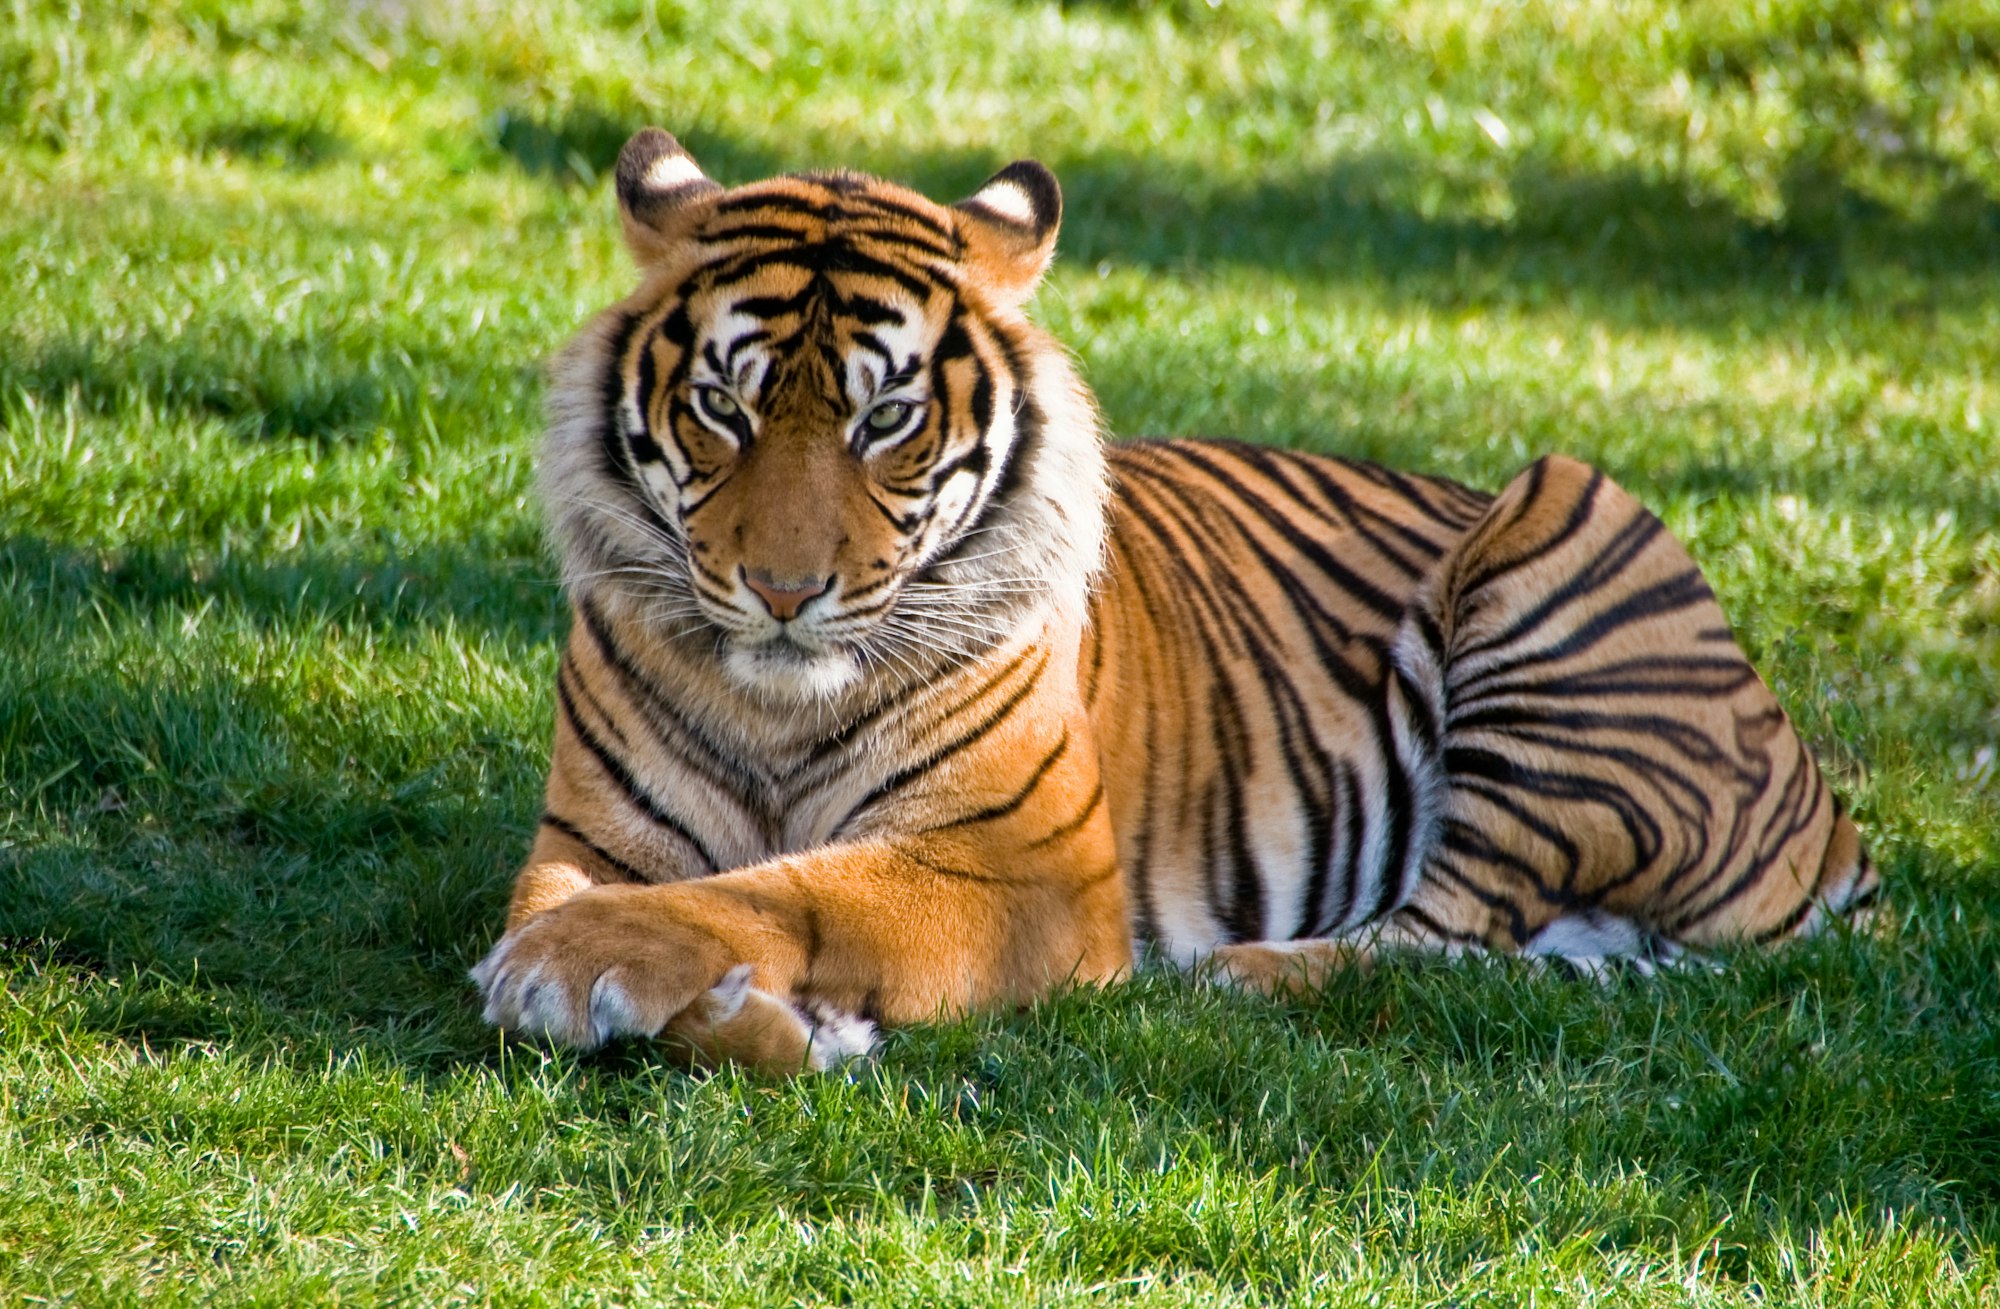 A tiger lying on grass.